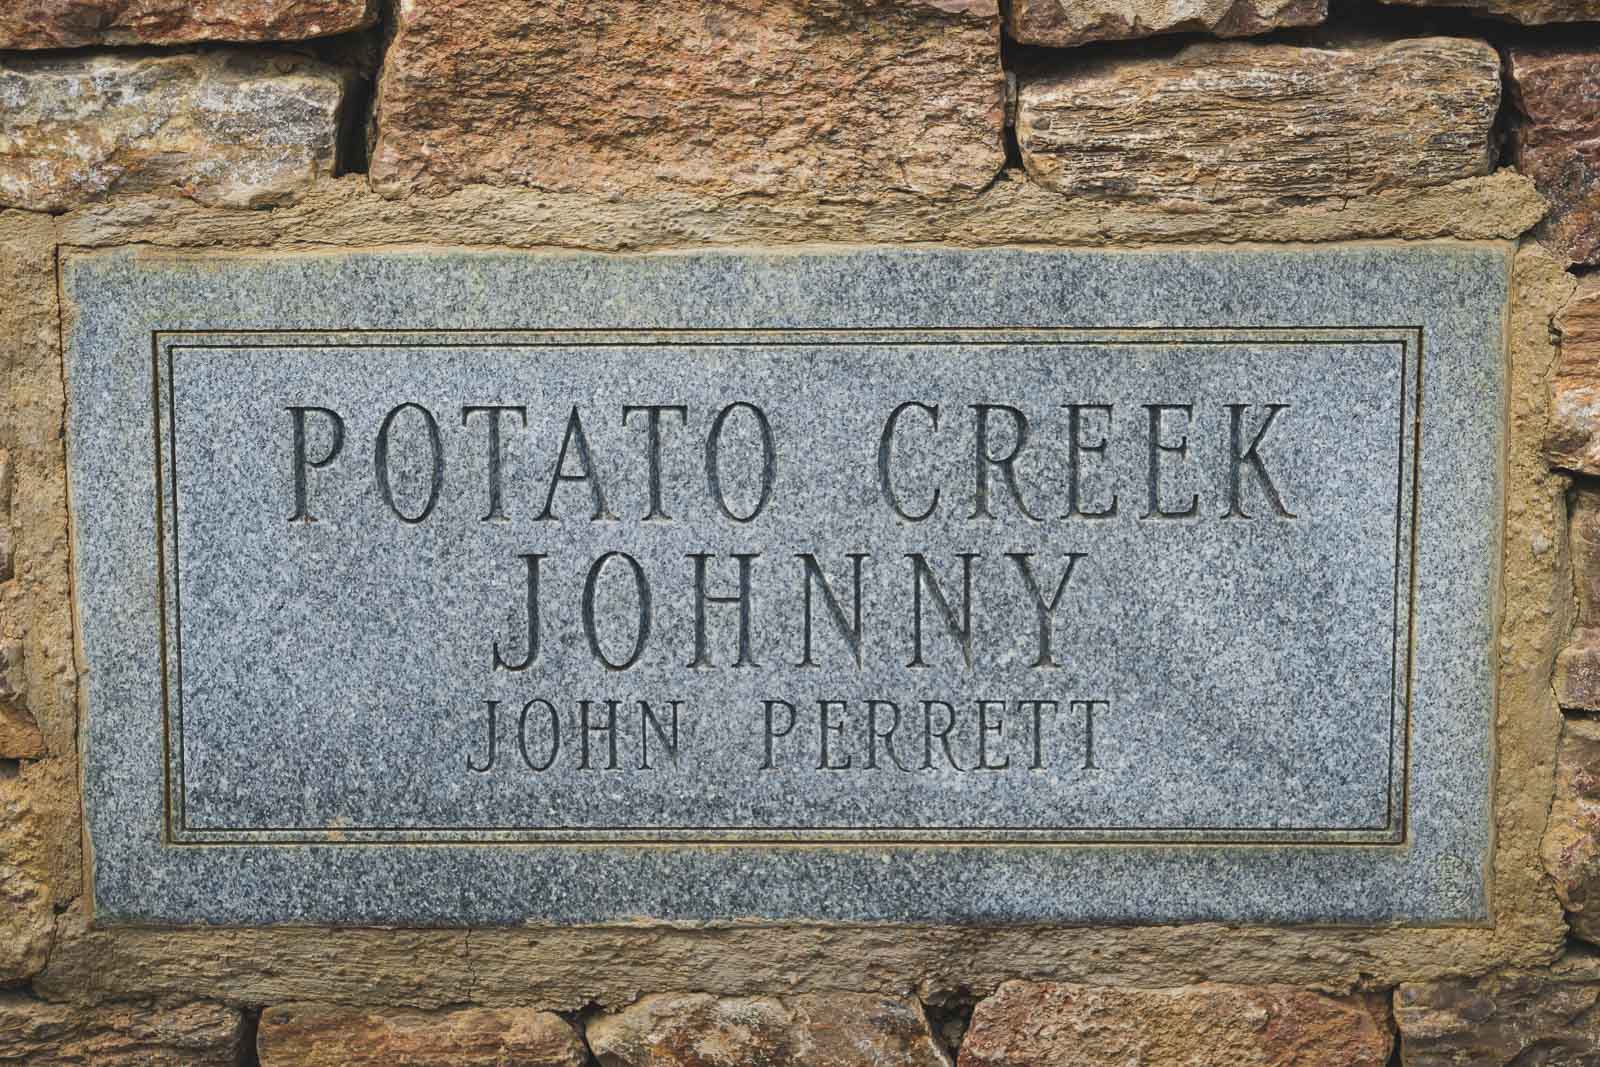 Potato Creek Johnny Deadwood